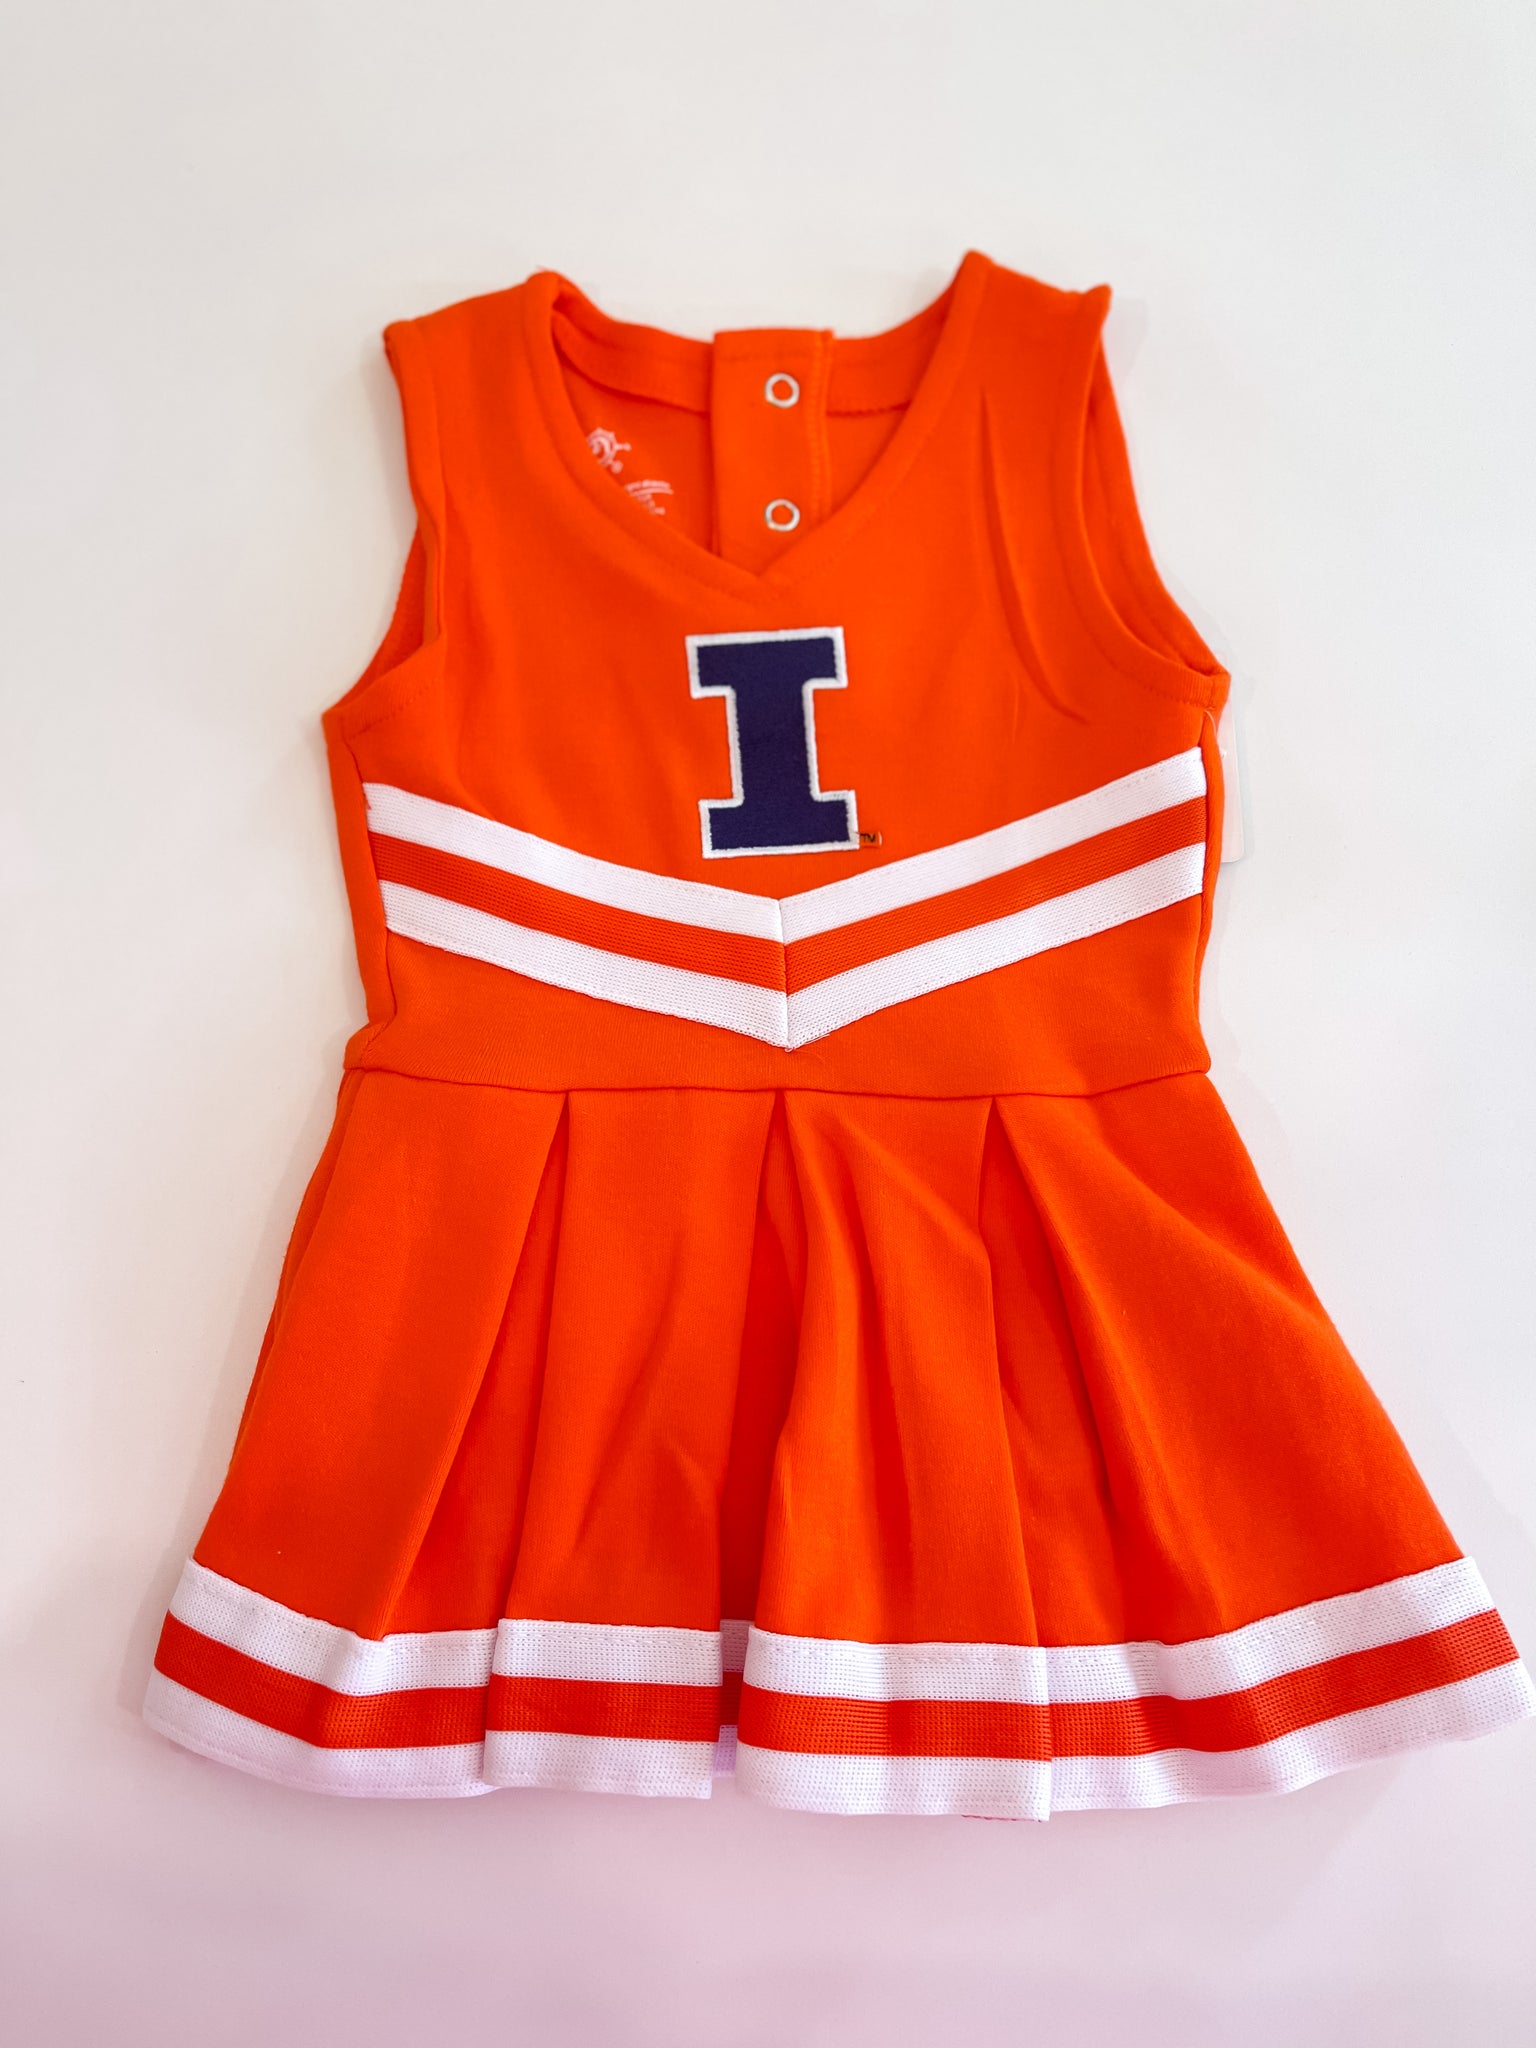 Infant Illini Cheer Dress - Orange